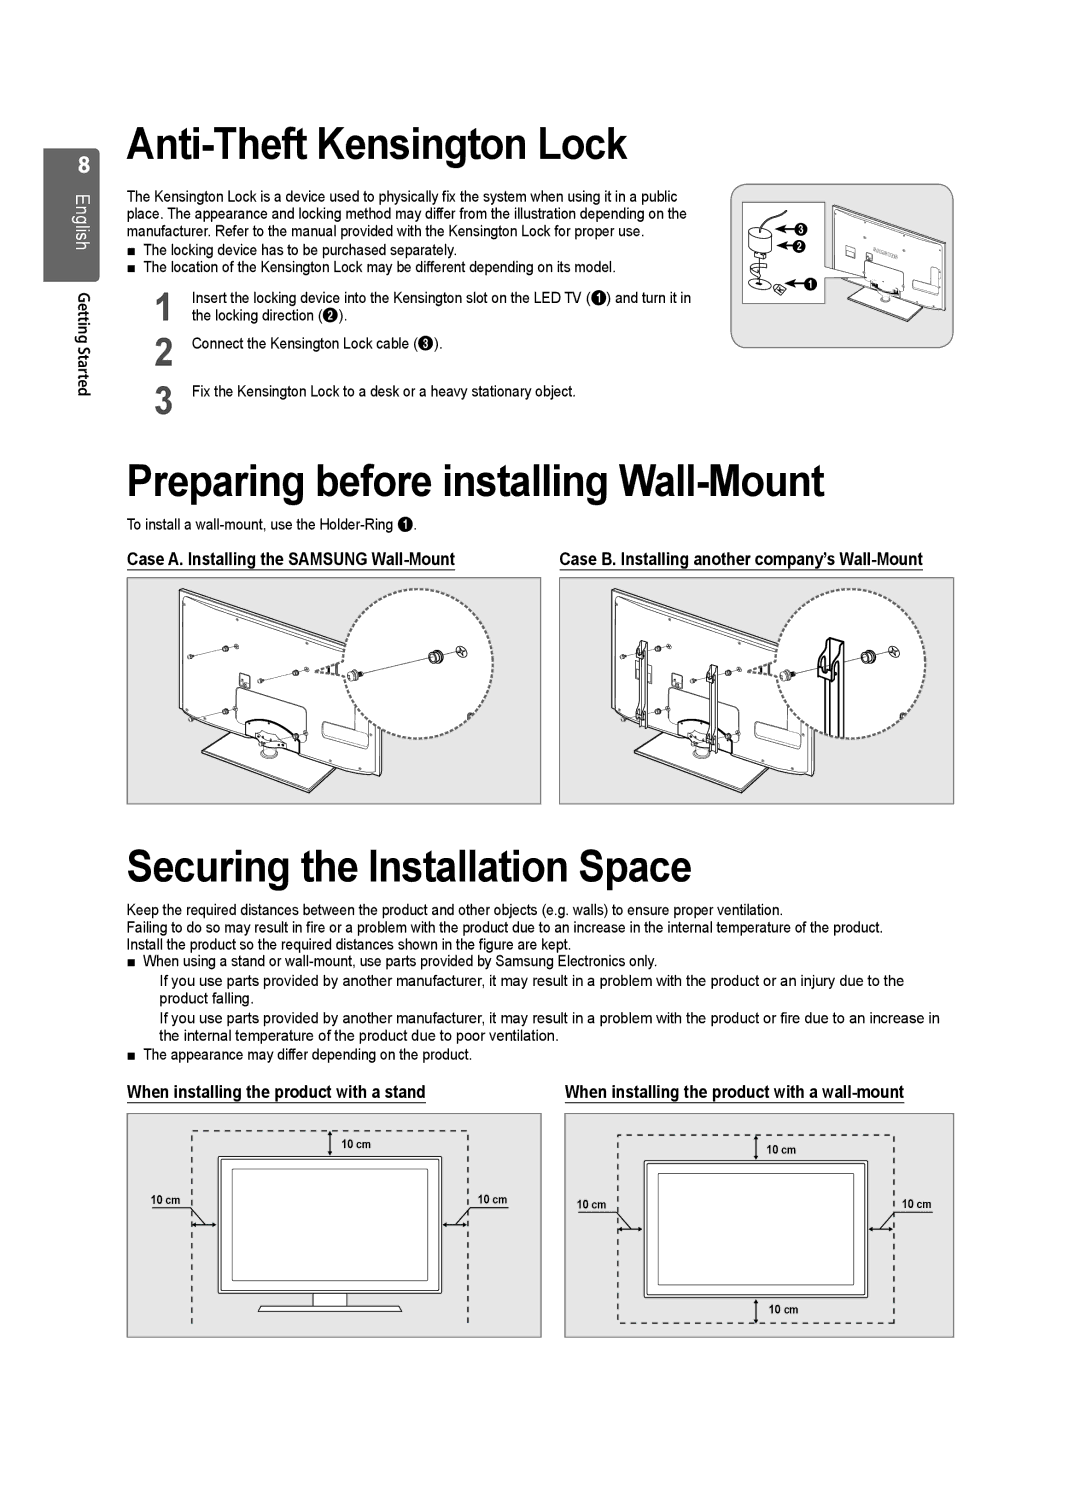 Samsung UE37B6000VWXXC Anti-Theft Kensington Lock, Preparing before installing Wall-Mount, Securing the Installation Space 